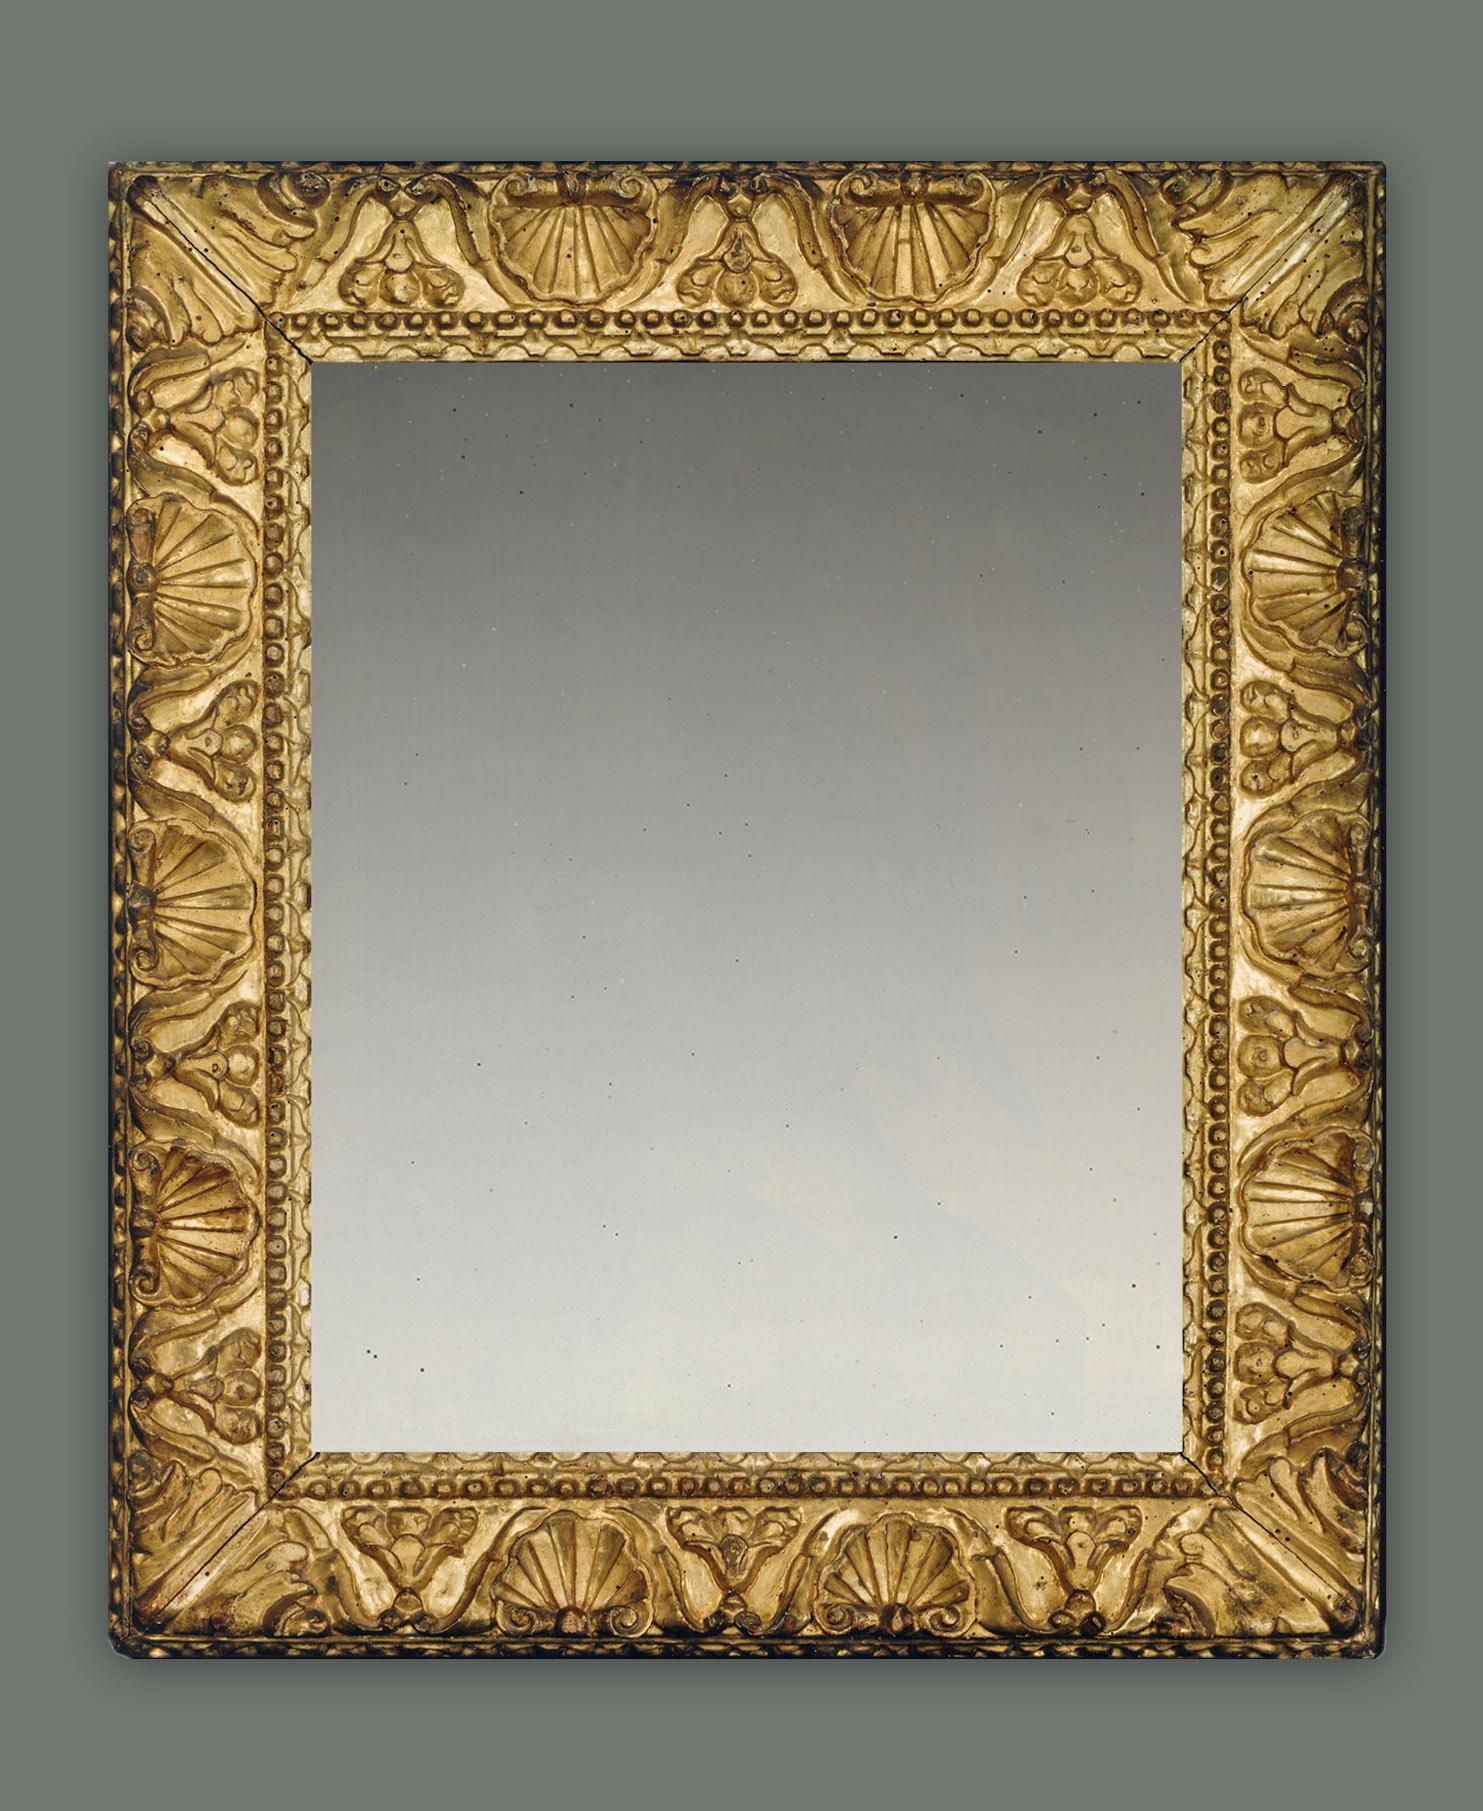 16th century mirror